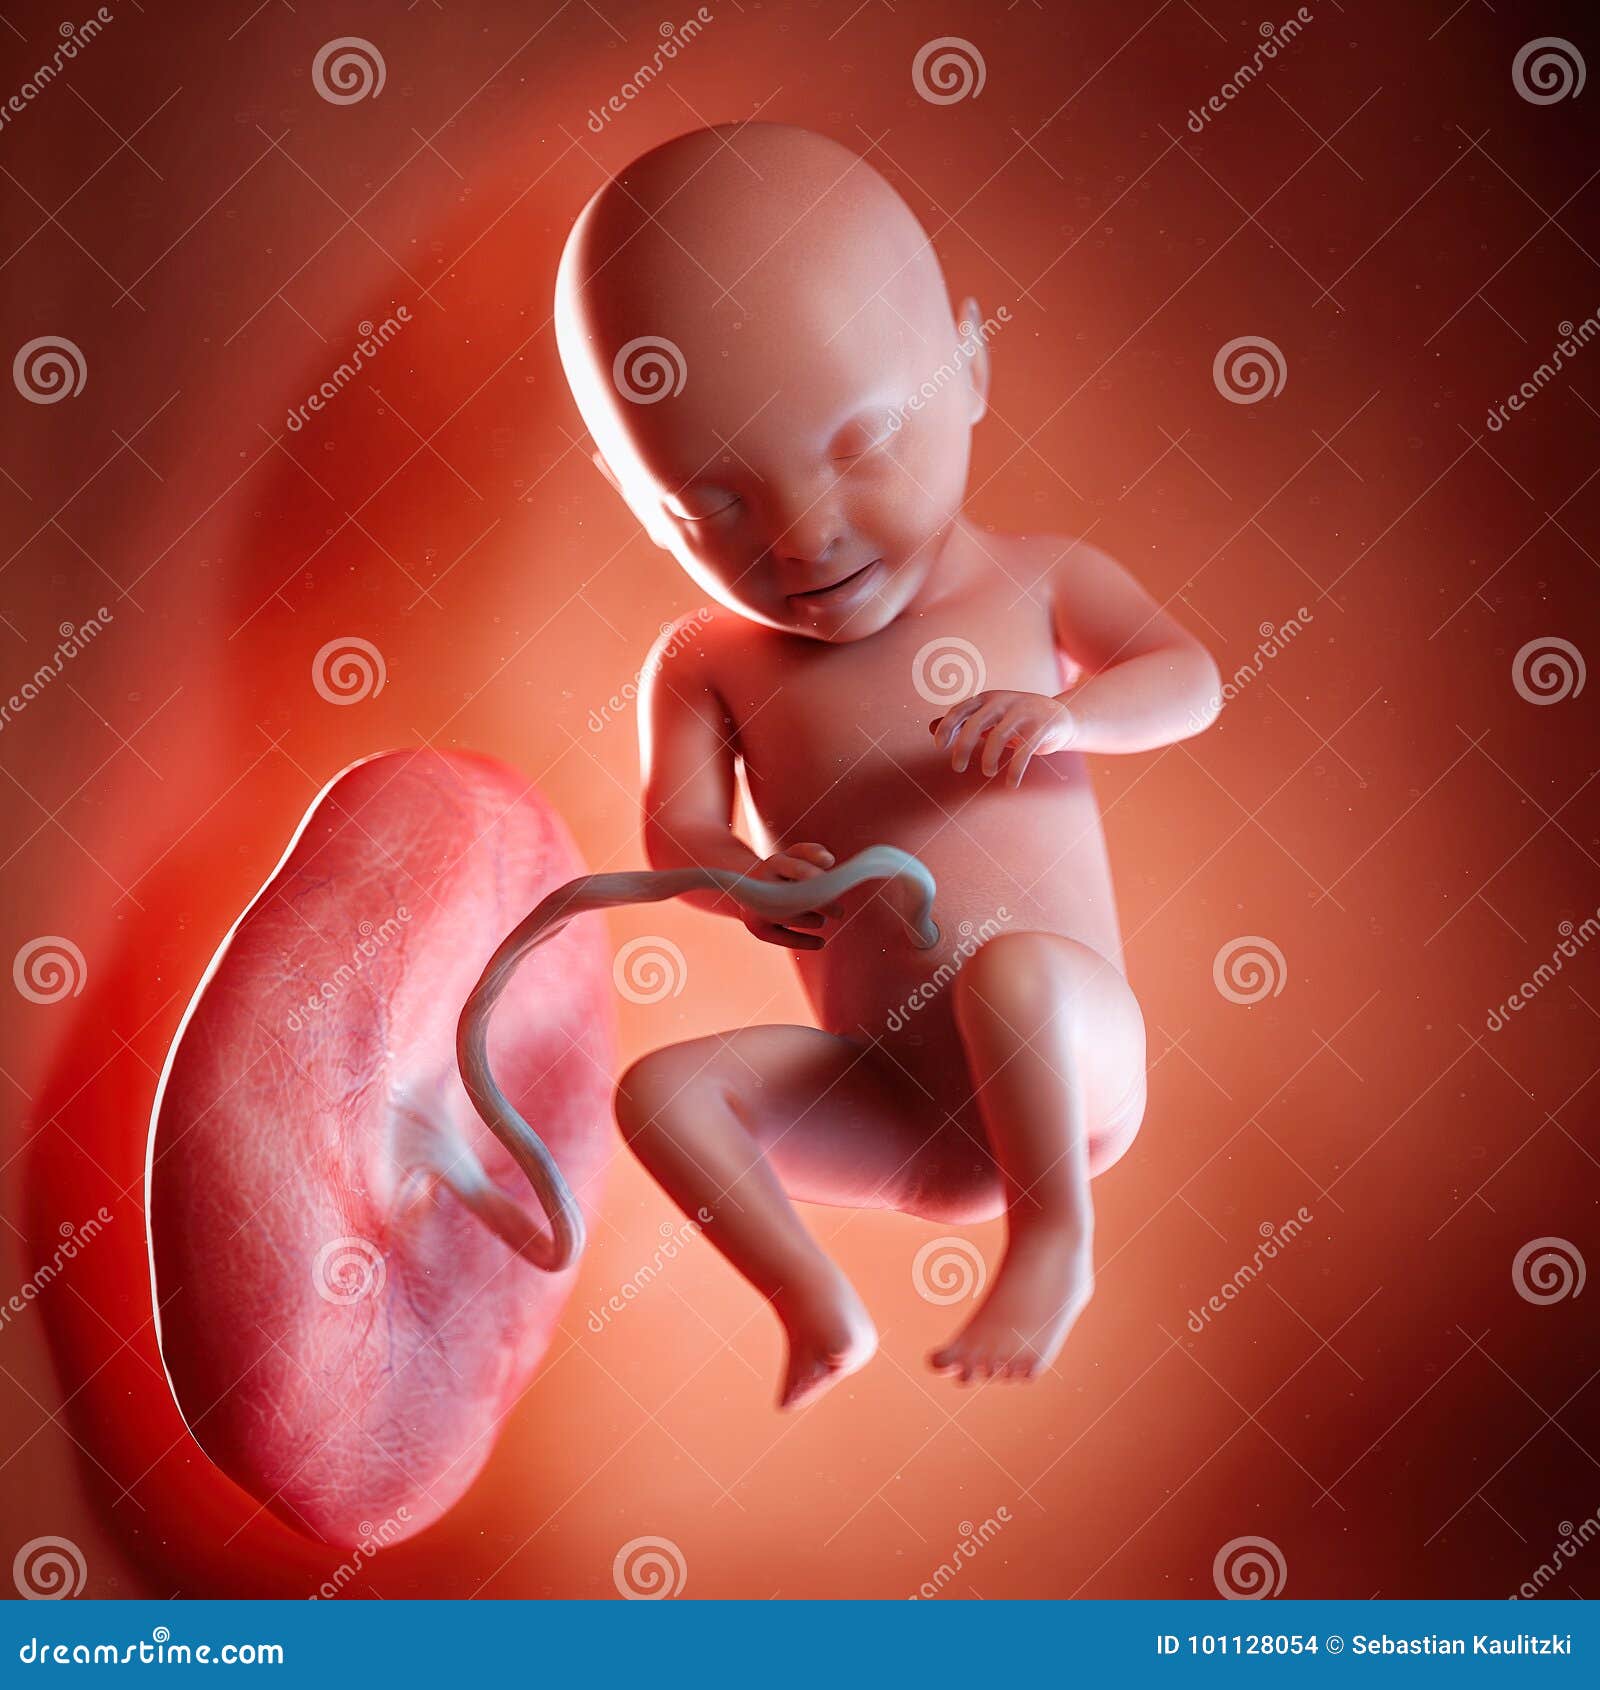 a fetus week 31